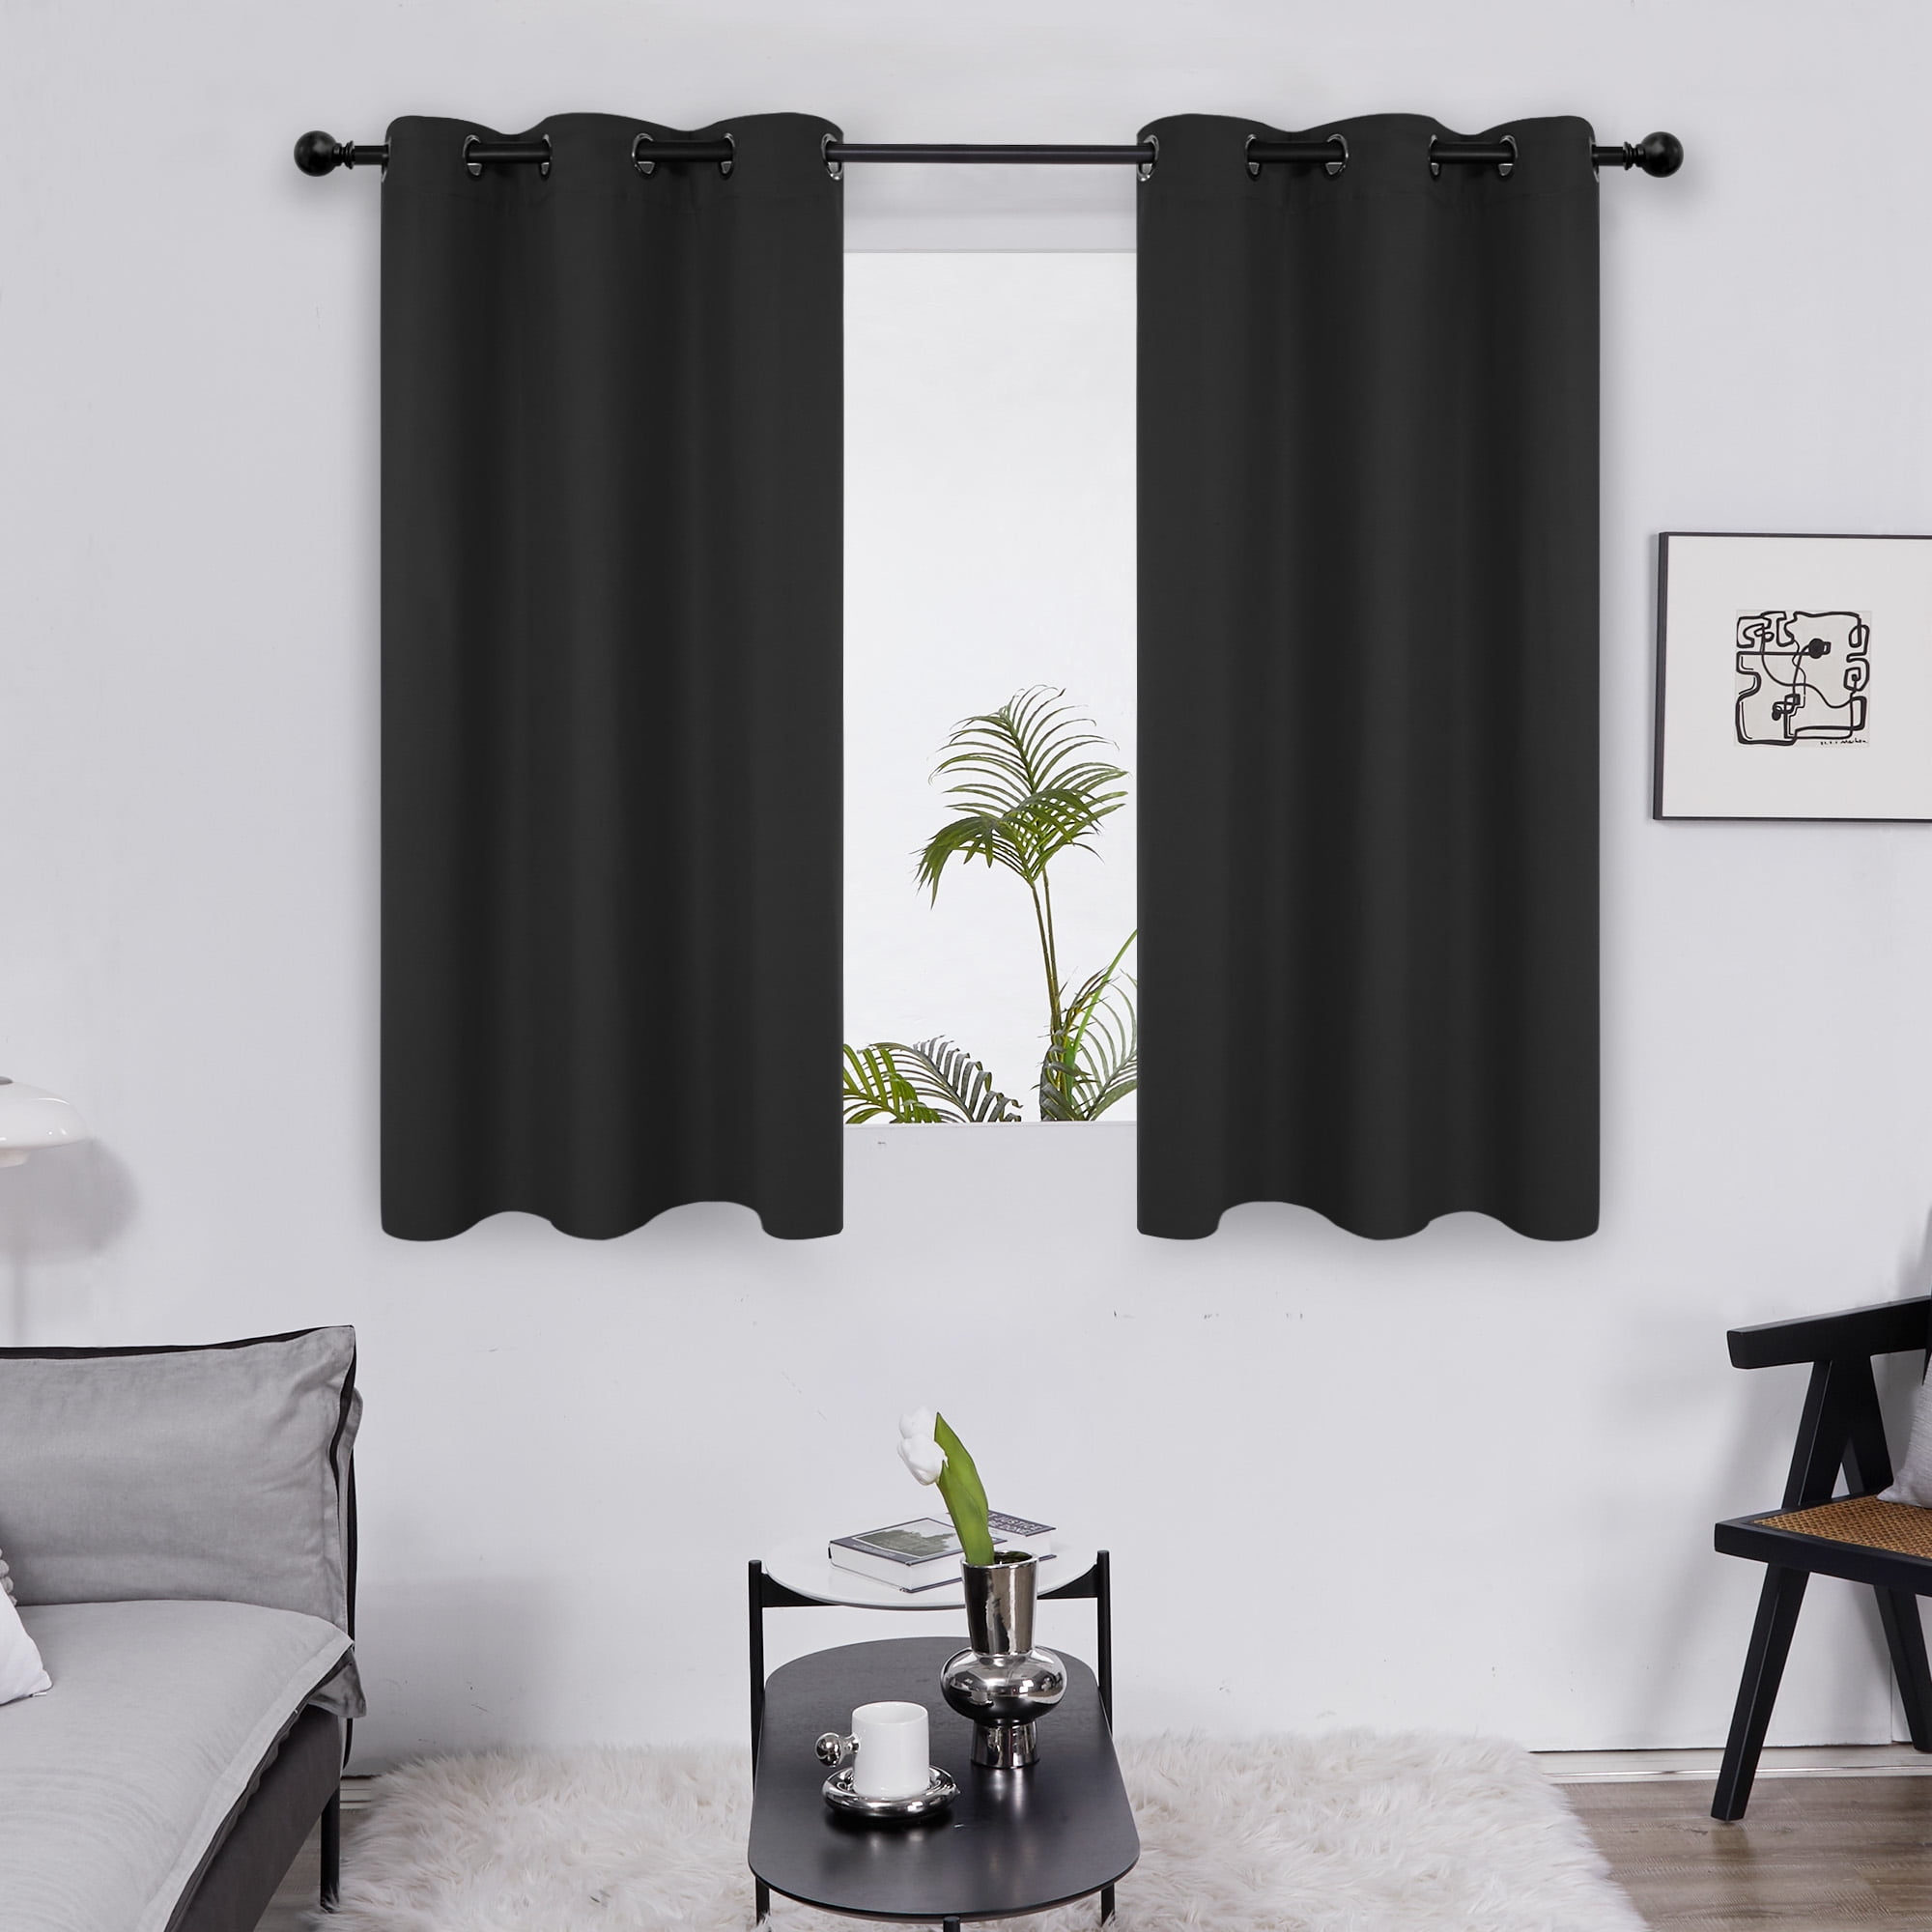 Details about   Curtain Living Room Bedroom Blackout Home Decor Grommets/Rod Pocket/Hook Curtain 